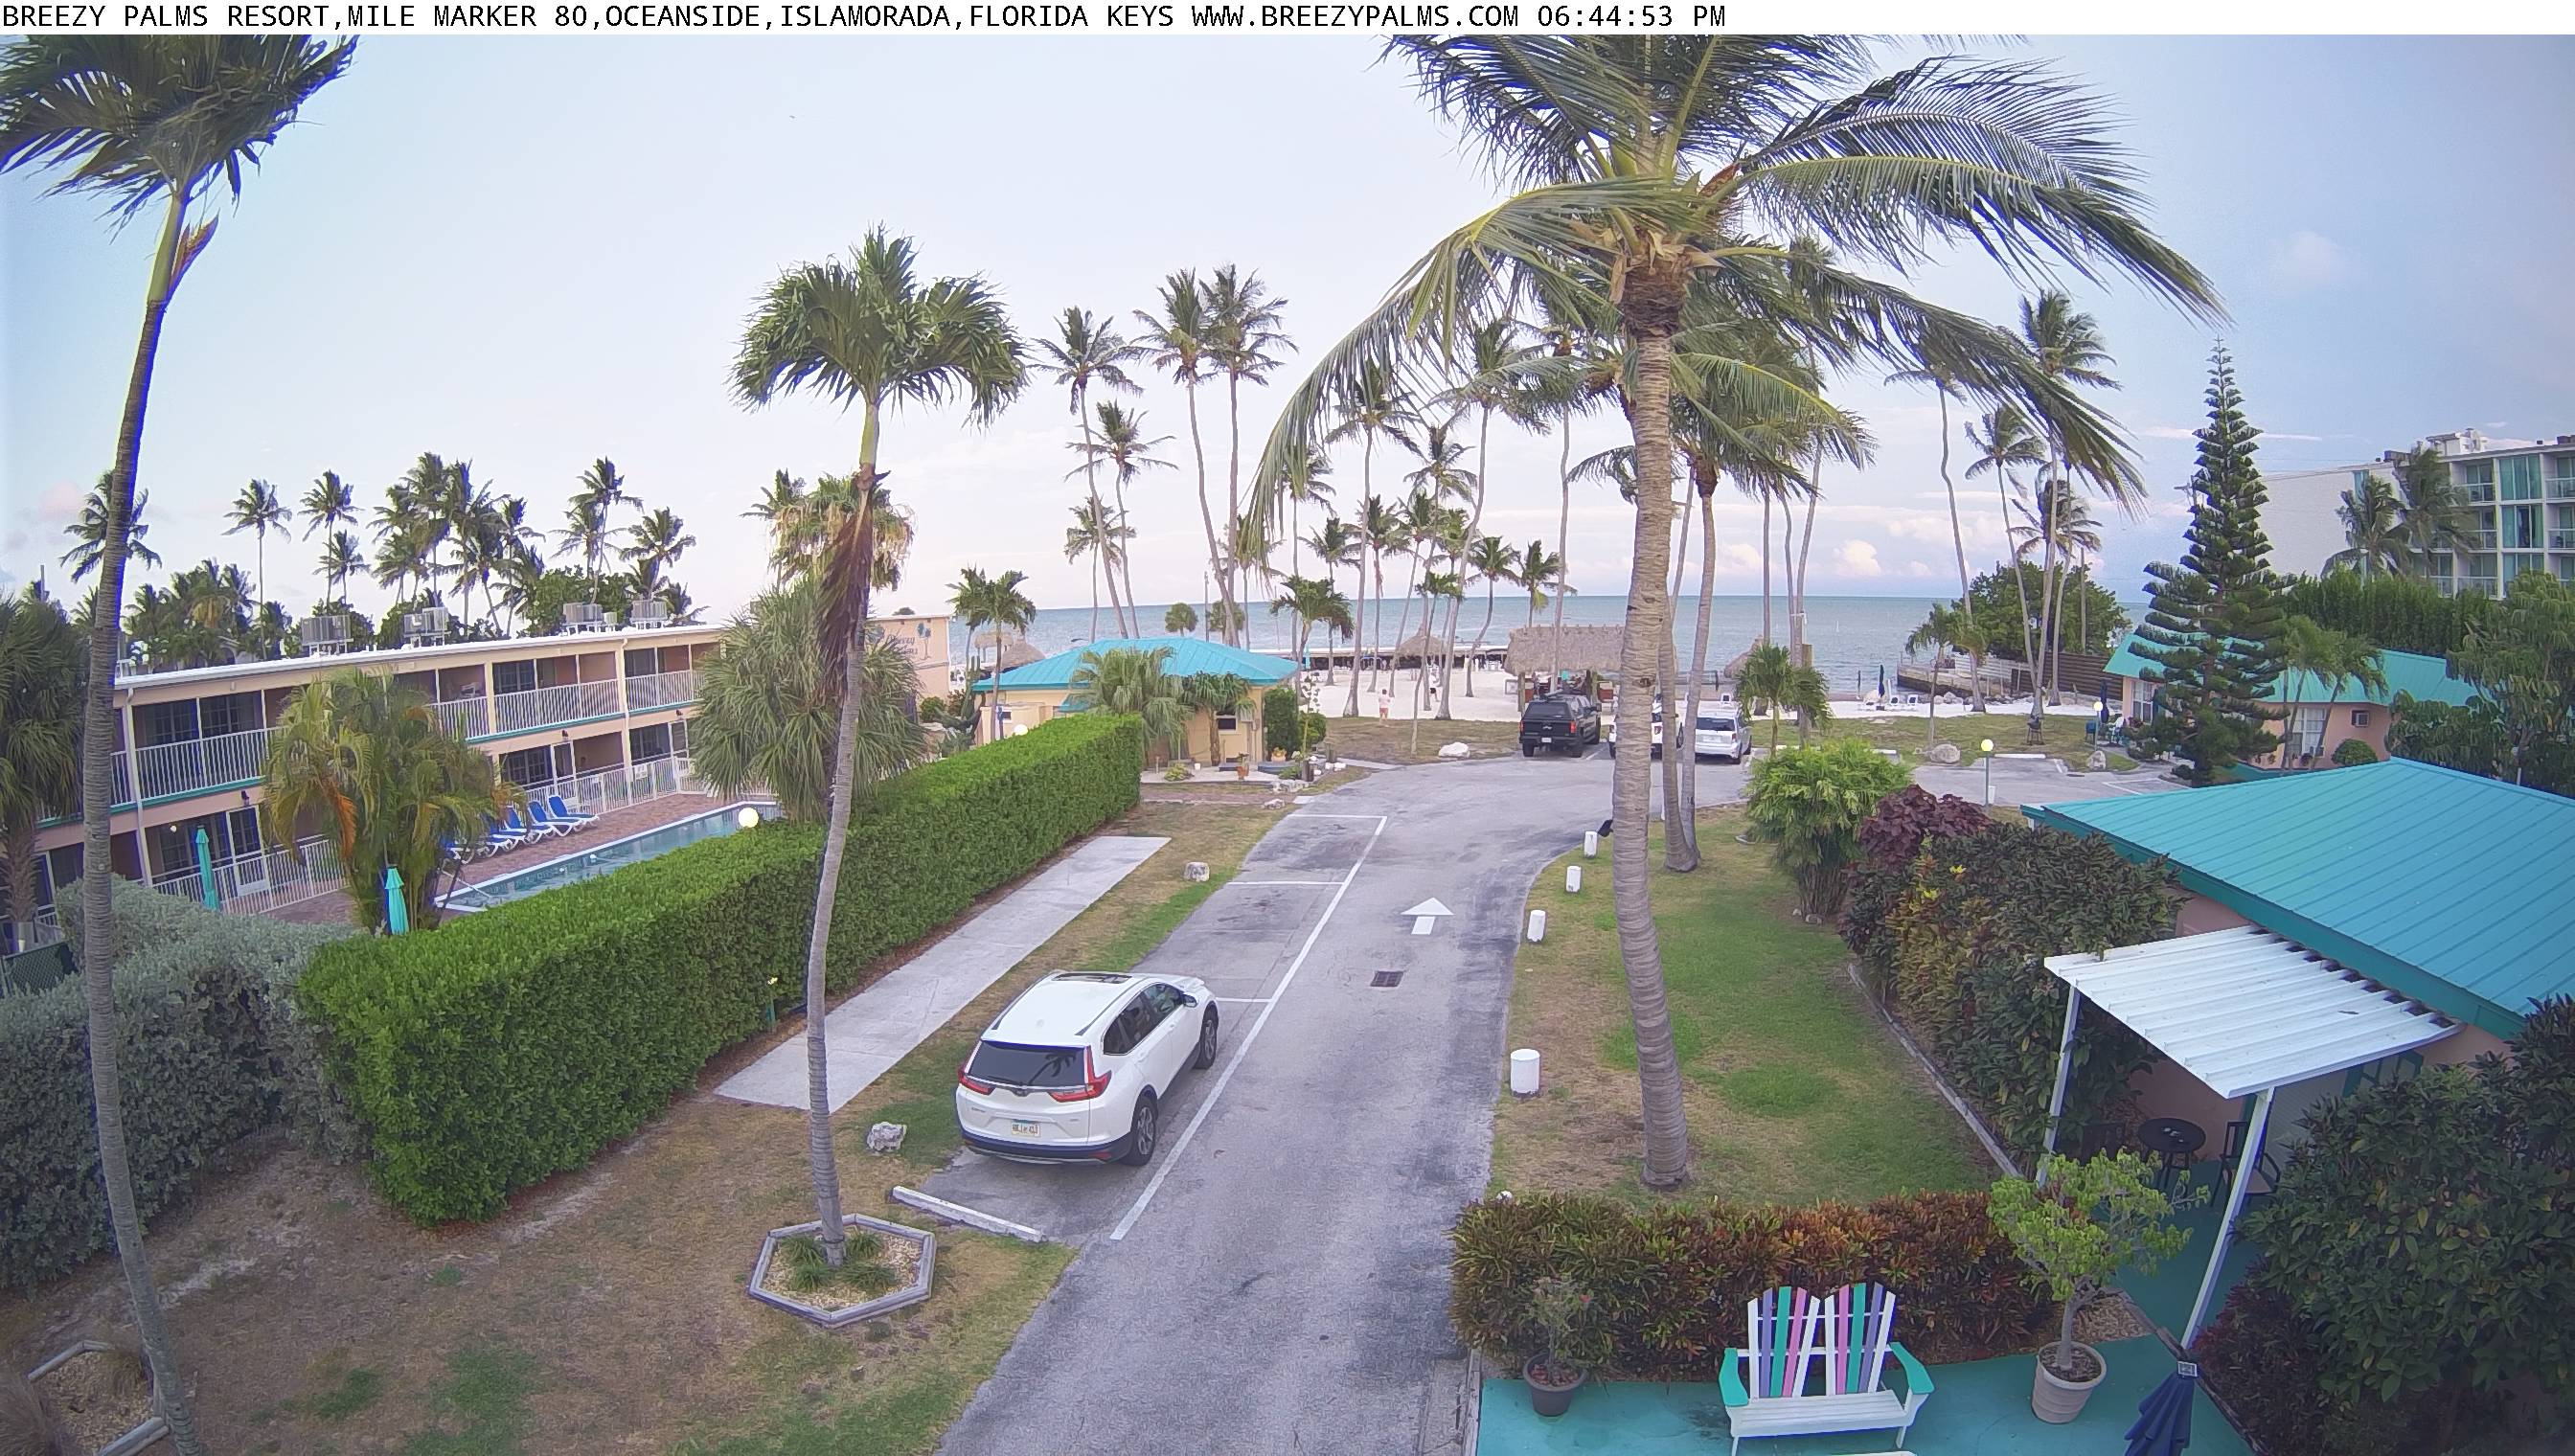 Florida Keys, Breezy Palms Resort in Oceanside - Florida